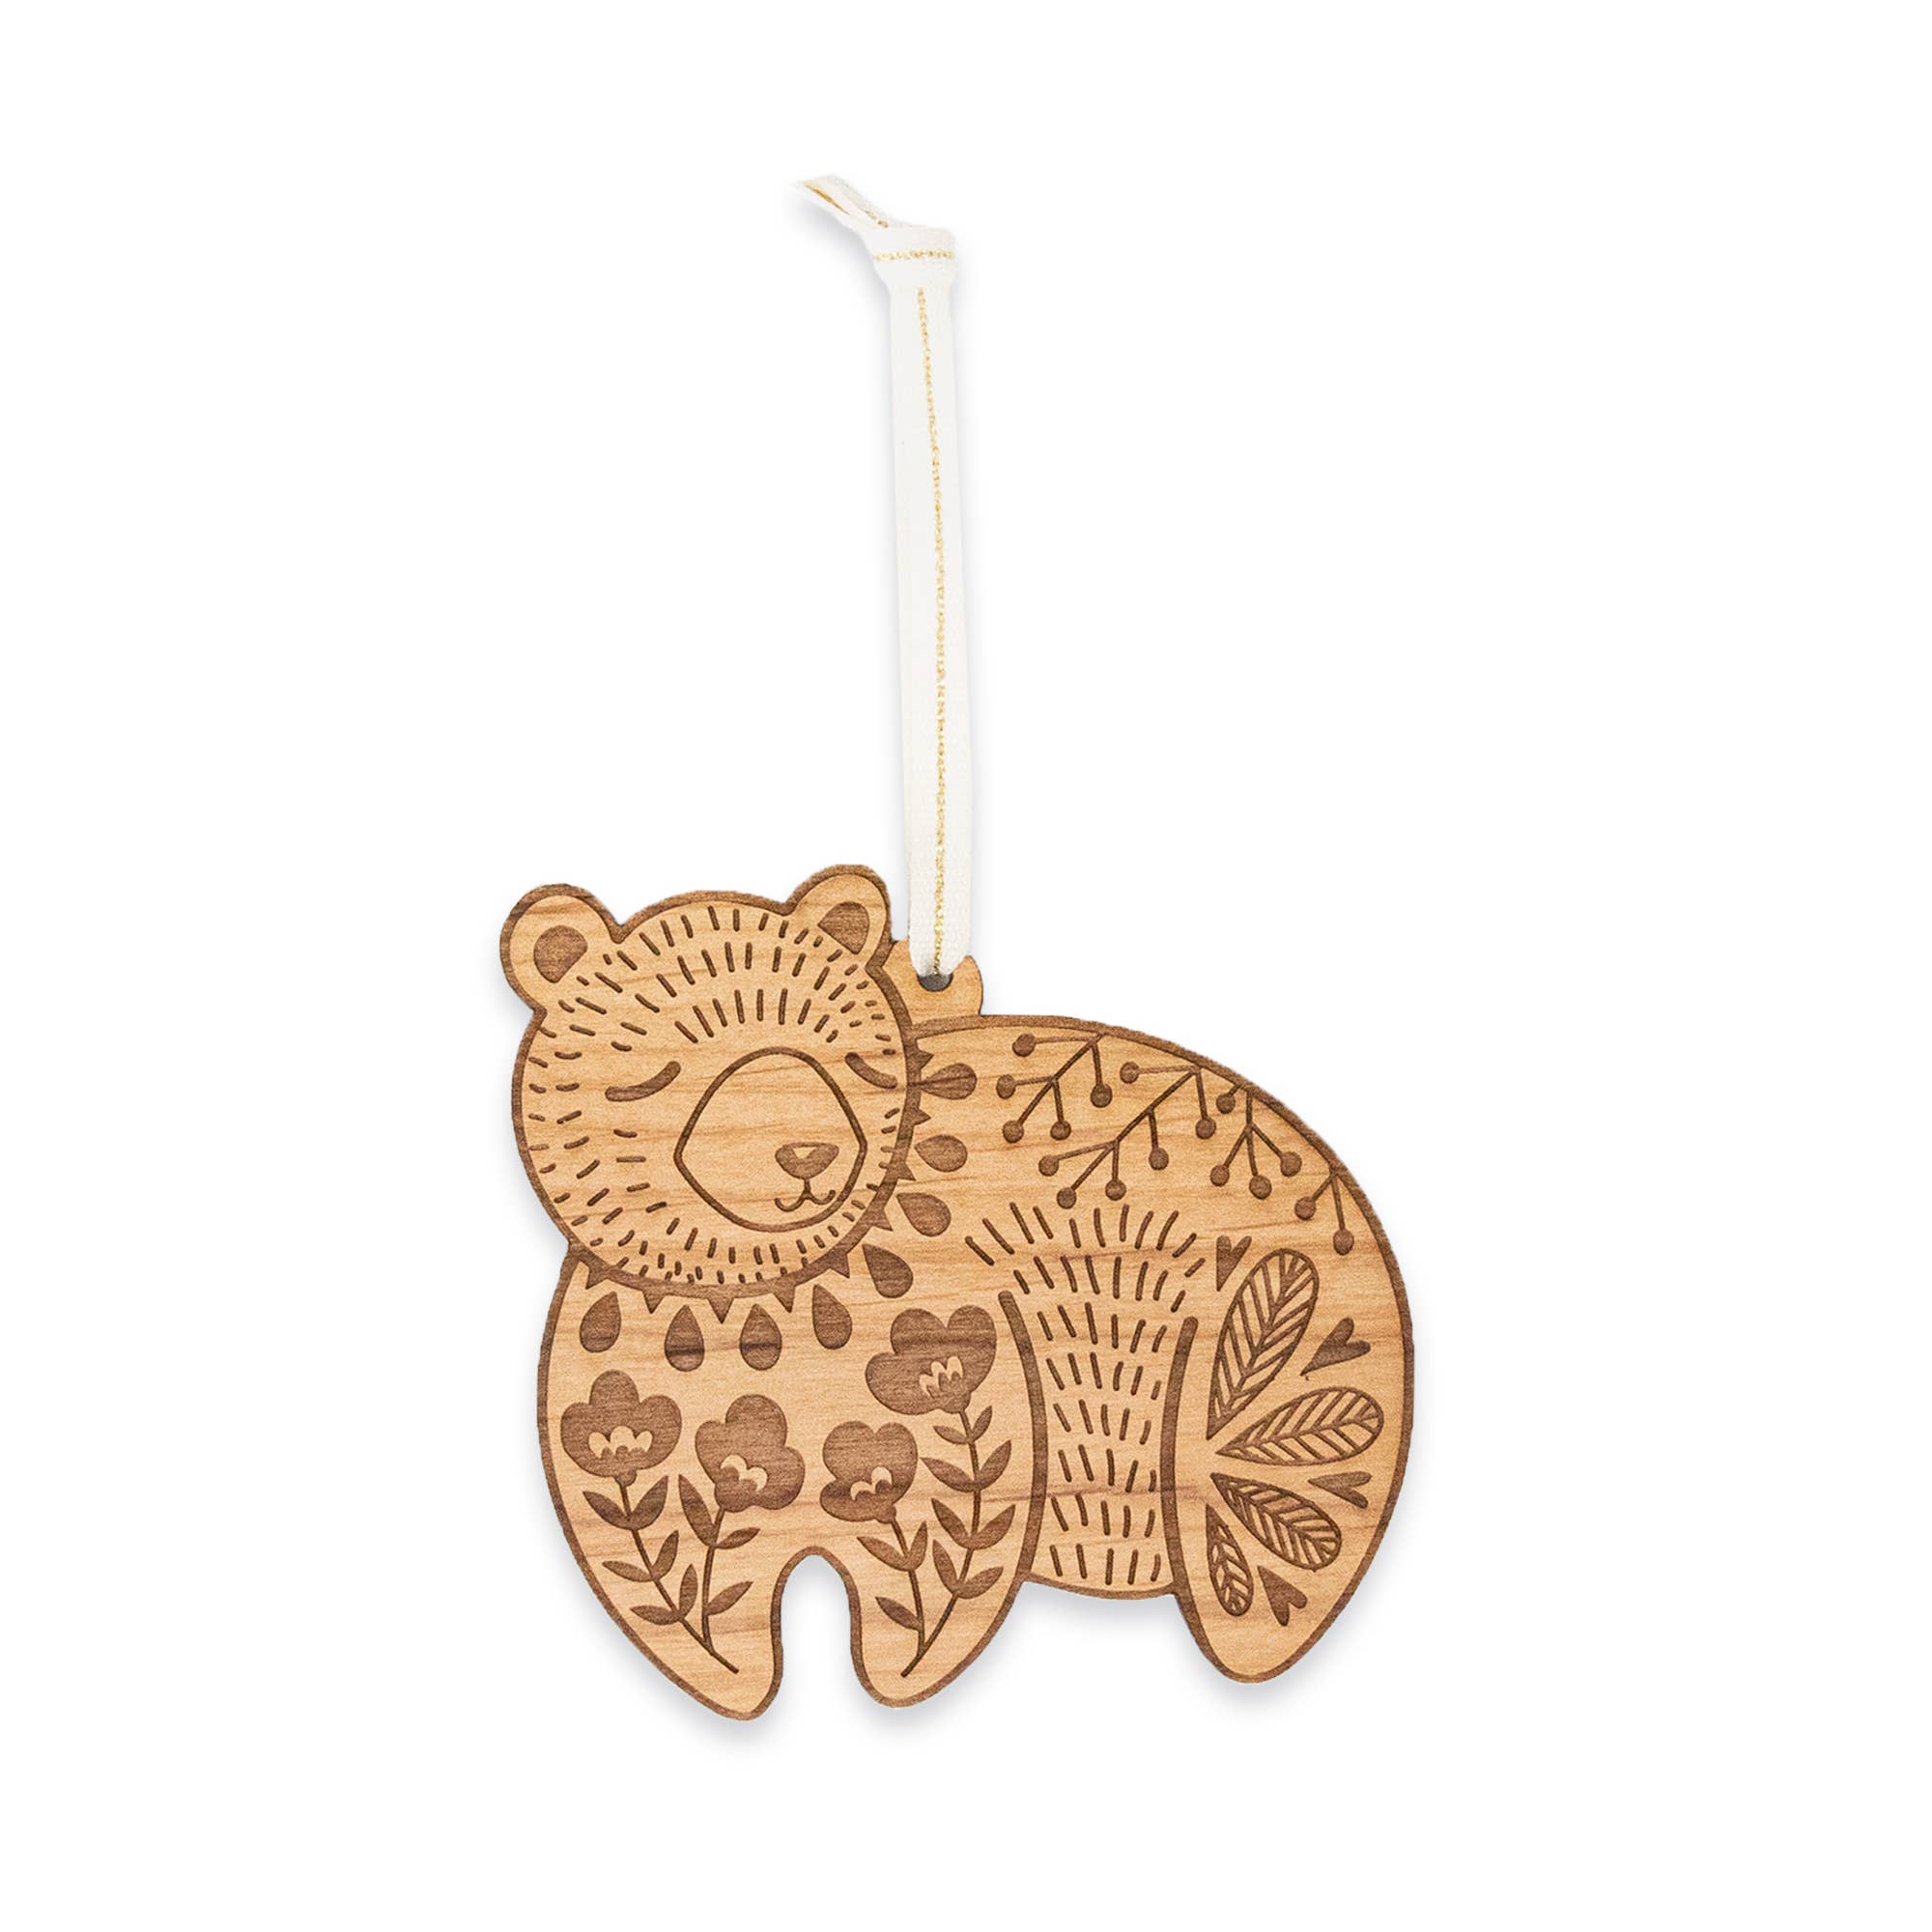 Bear Wood Ornament